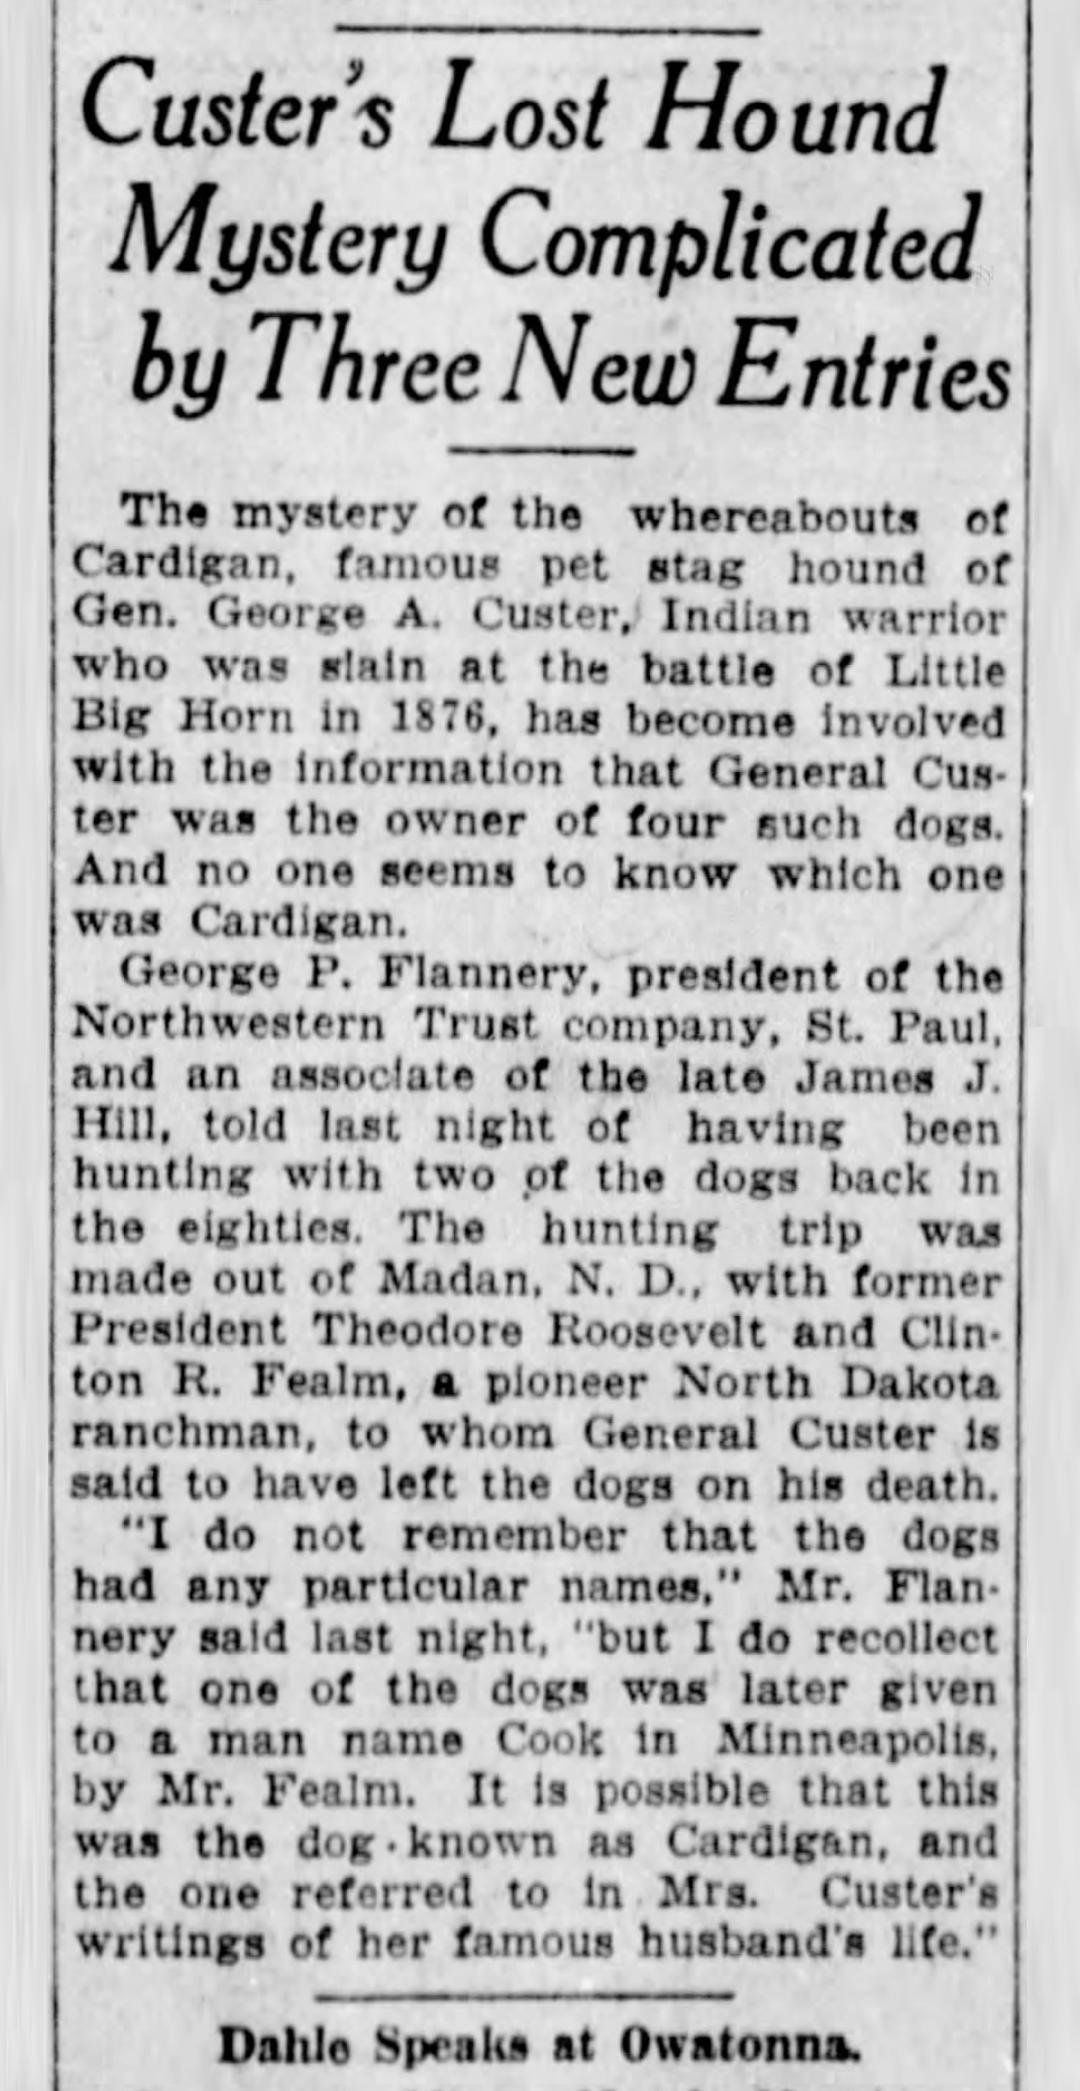 Minneapolis Tribune March 23, 1923 article